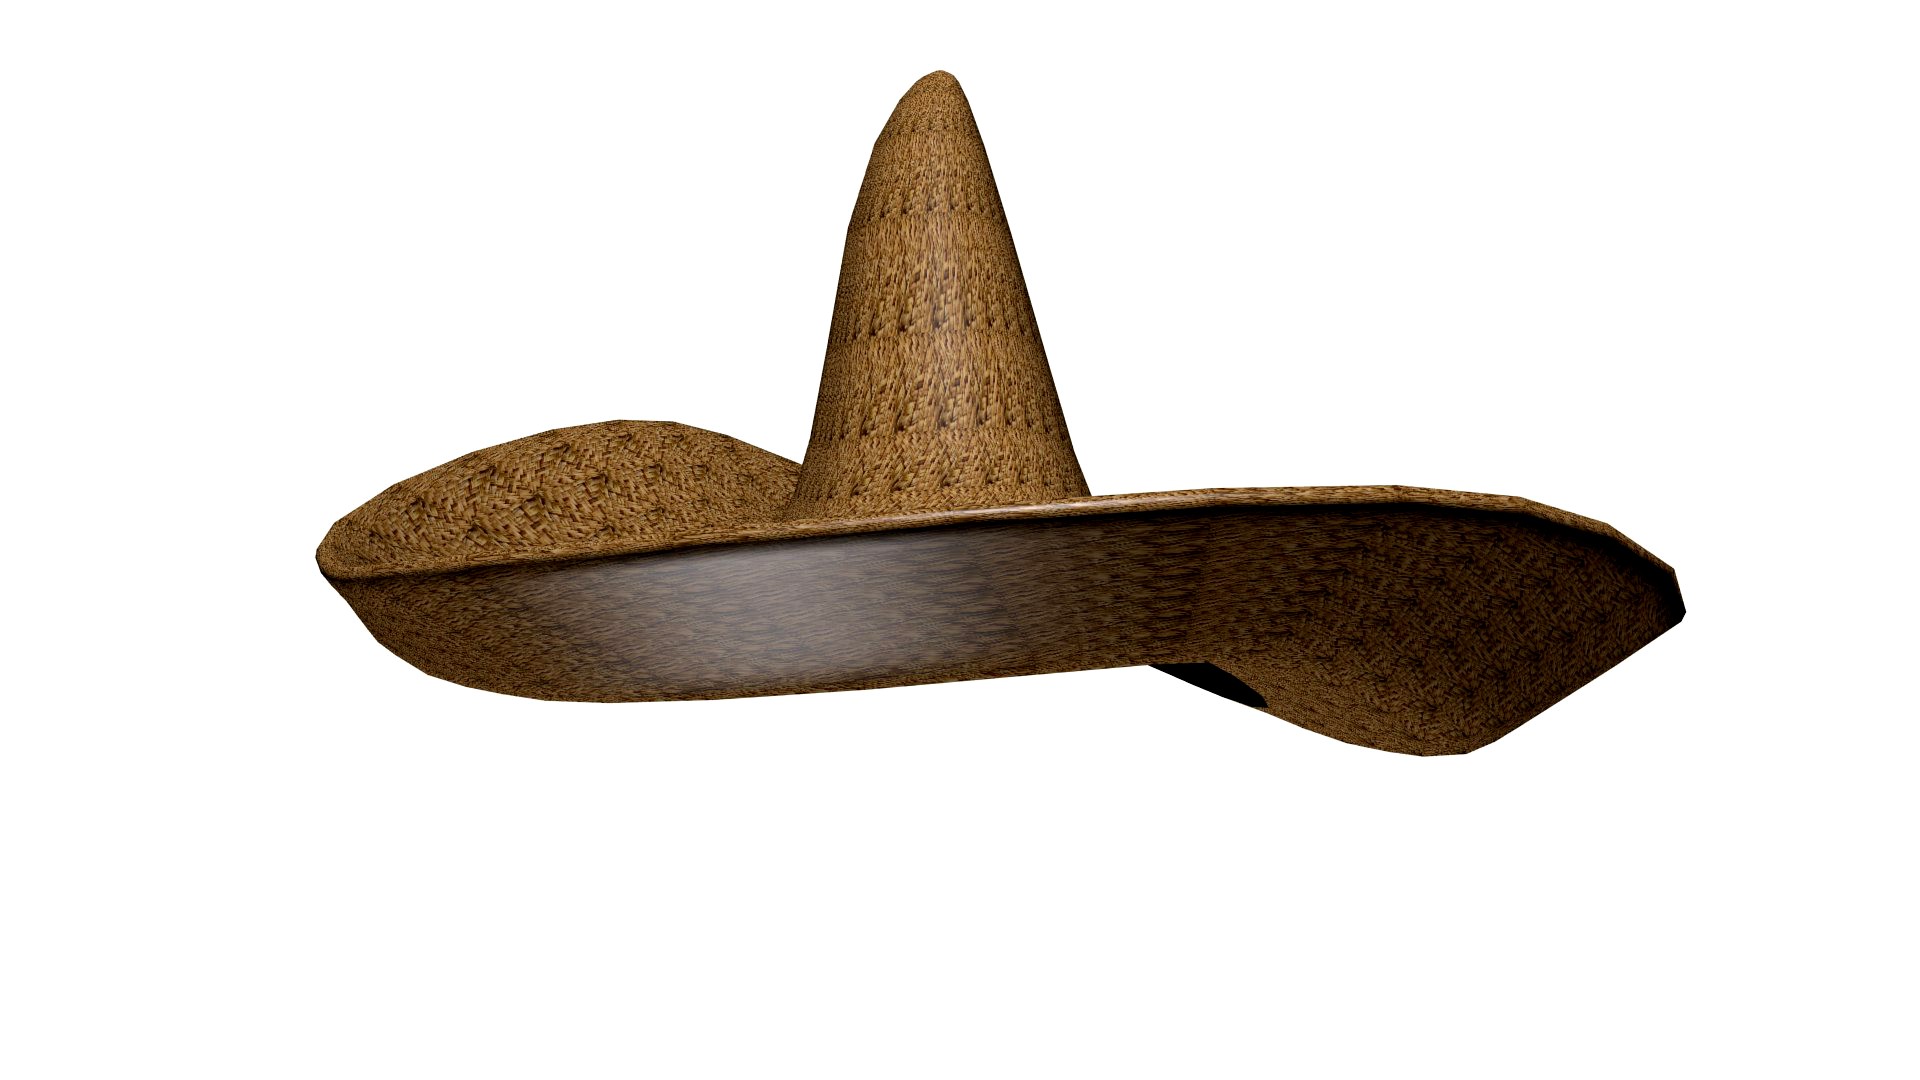 mexican sombrero